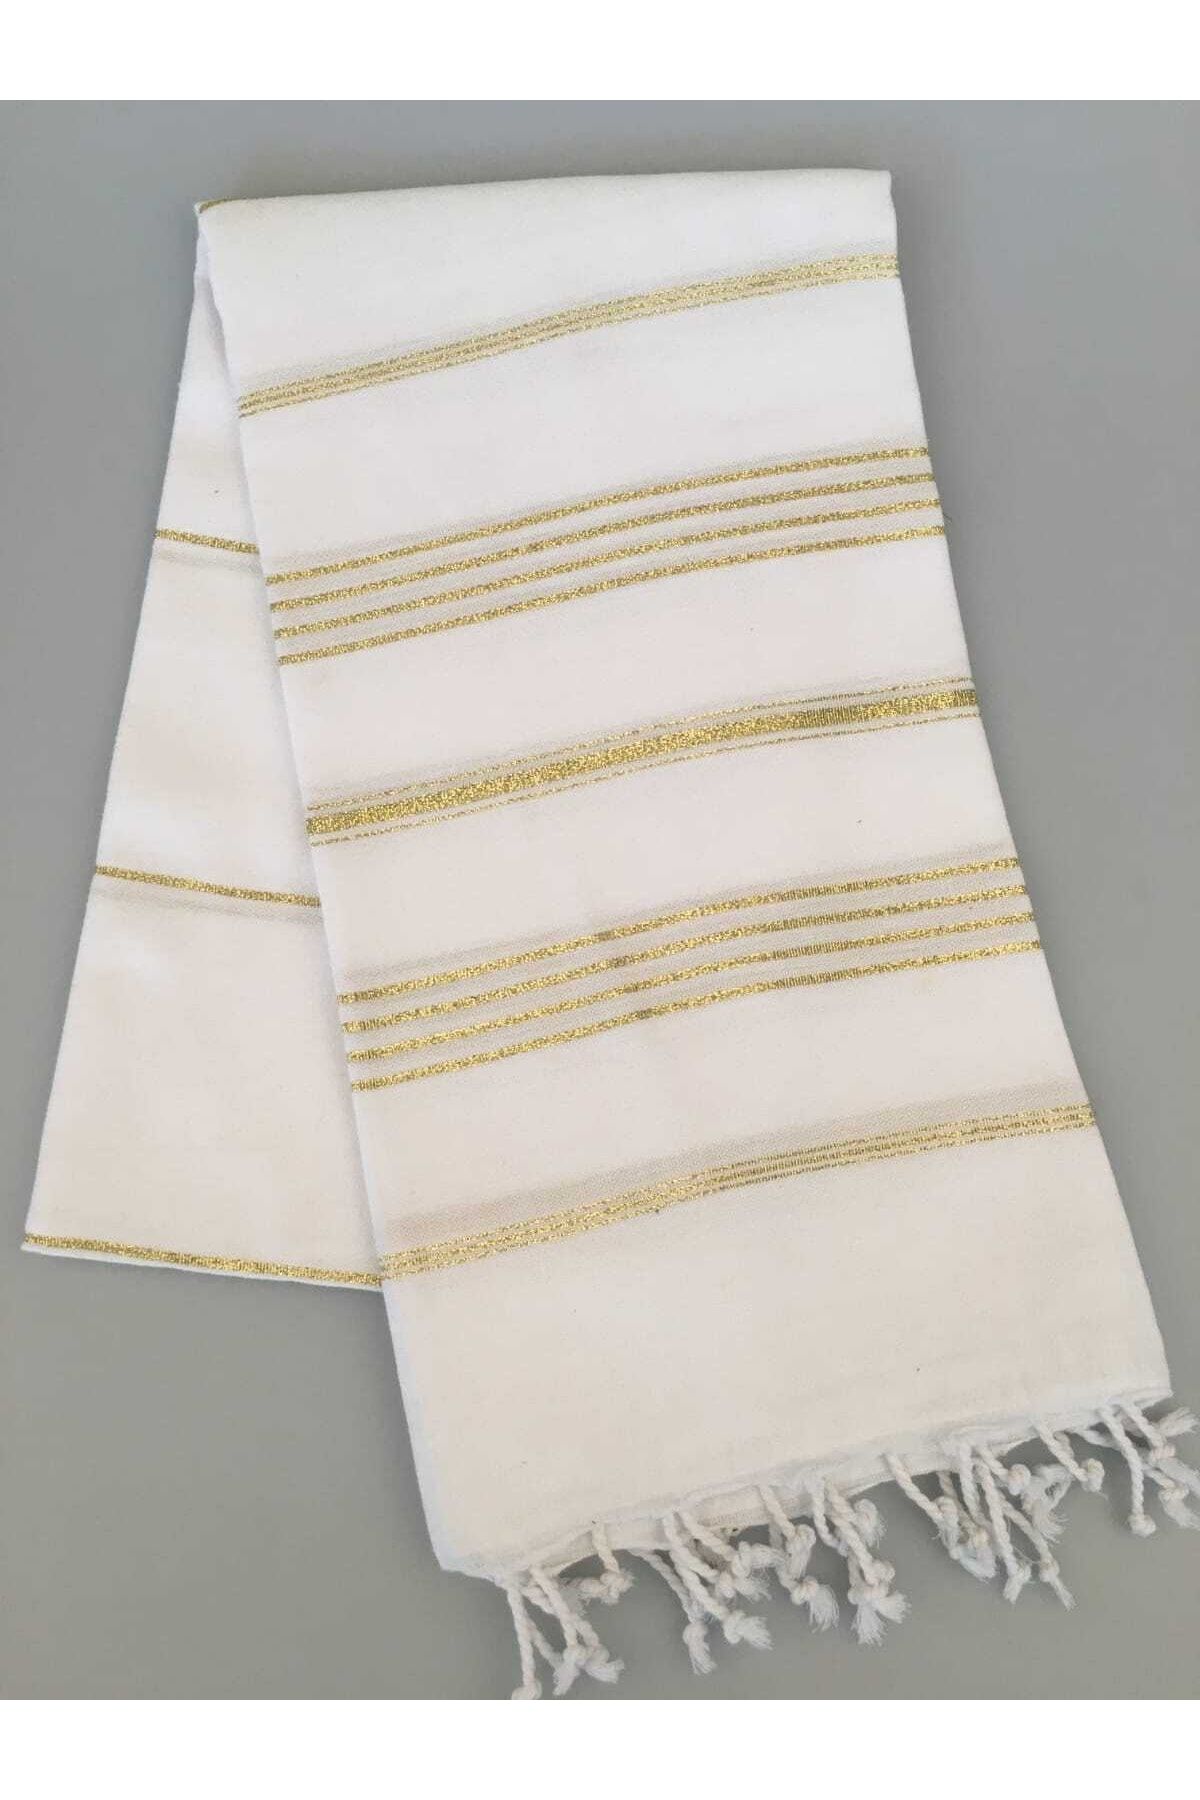 HRN Textile Sultan Desenli Peştemal 100x180 Cm